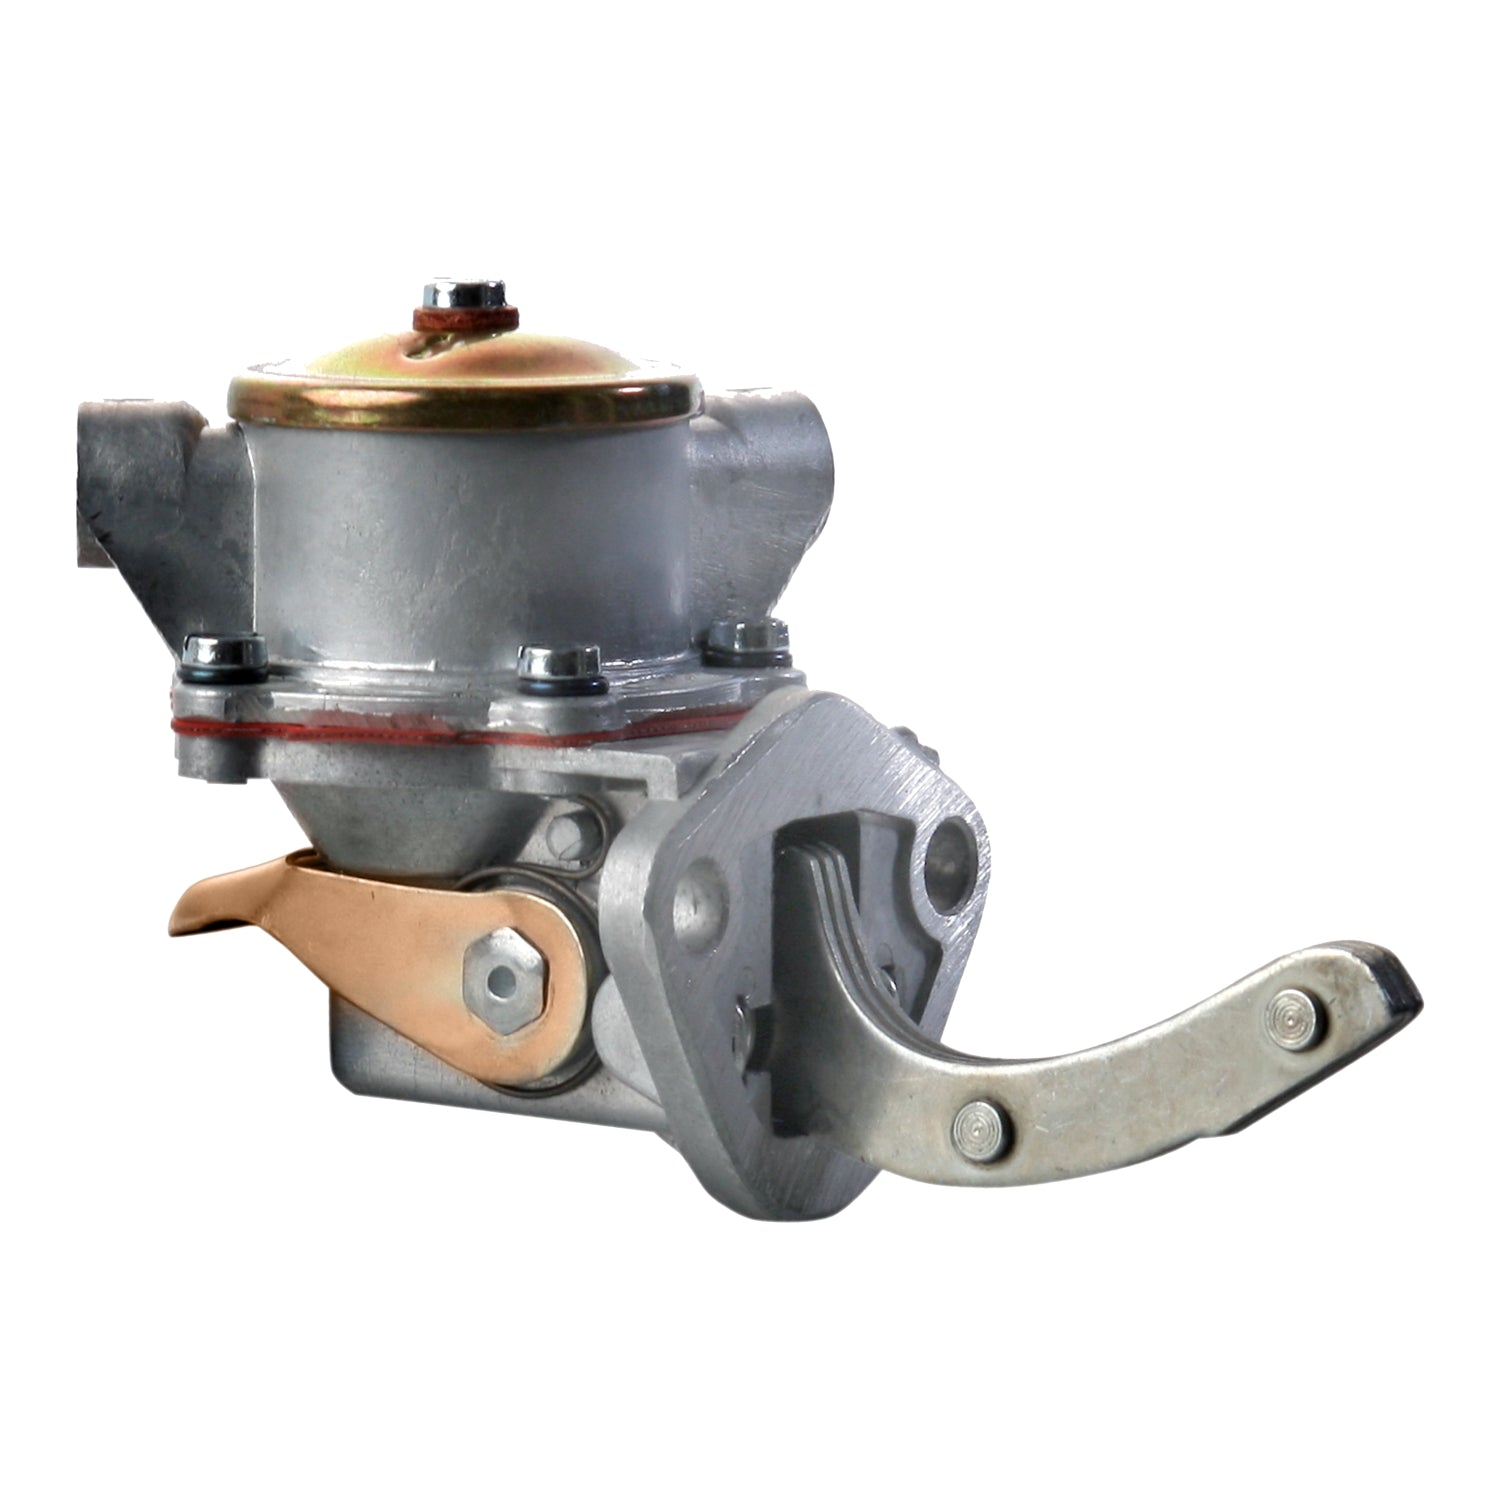 Fuel Pump Replacement for Case; BD-144A 708294R93